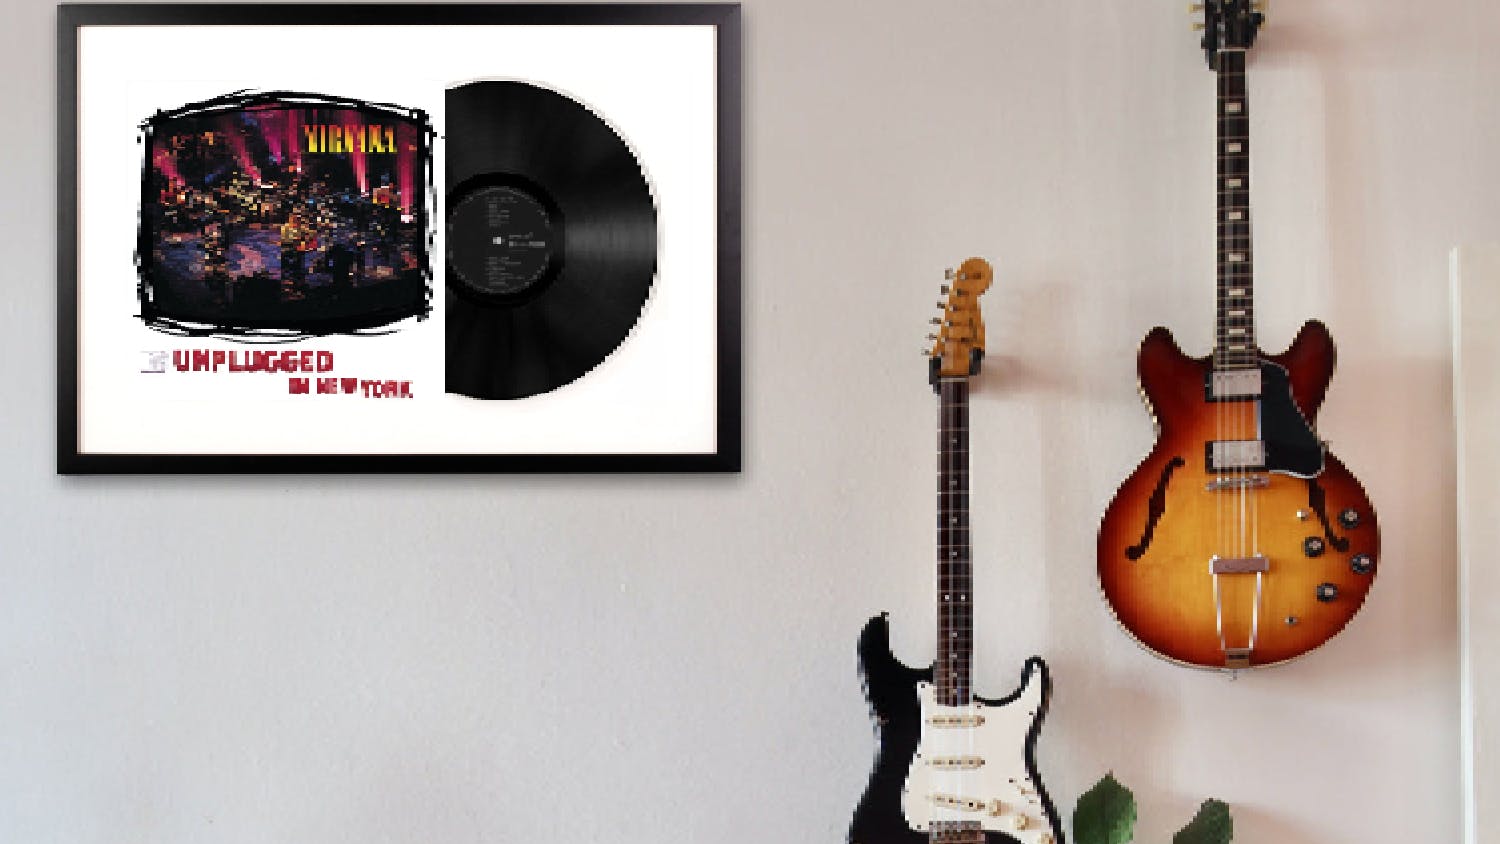 Nirvana - MTV Unplugged Framed Vinyl + Album Art